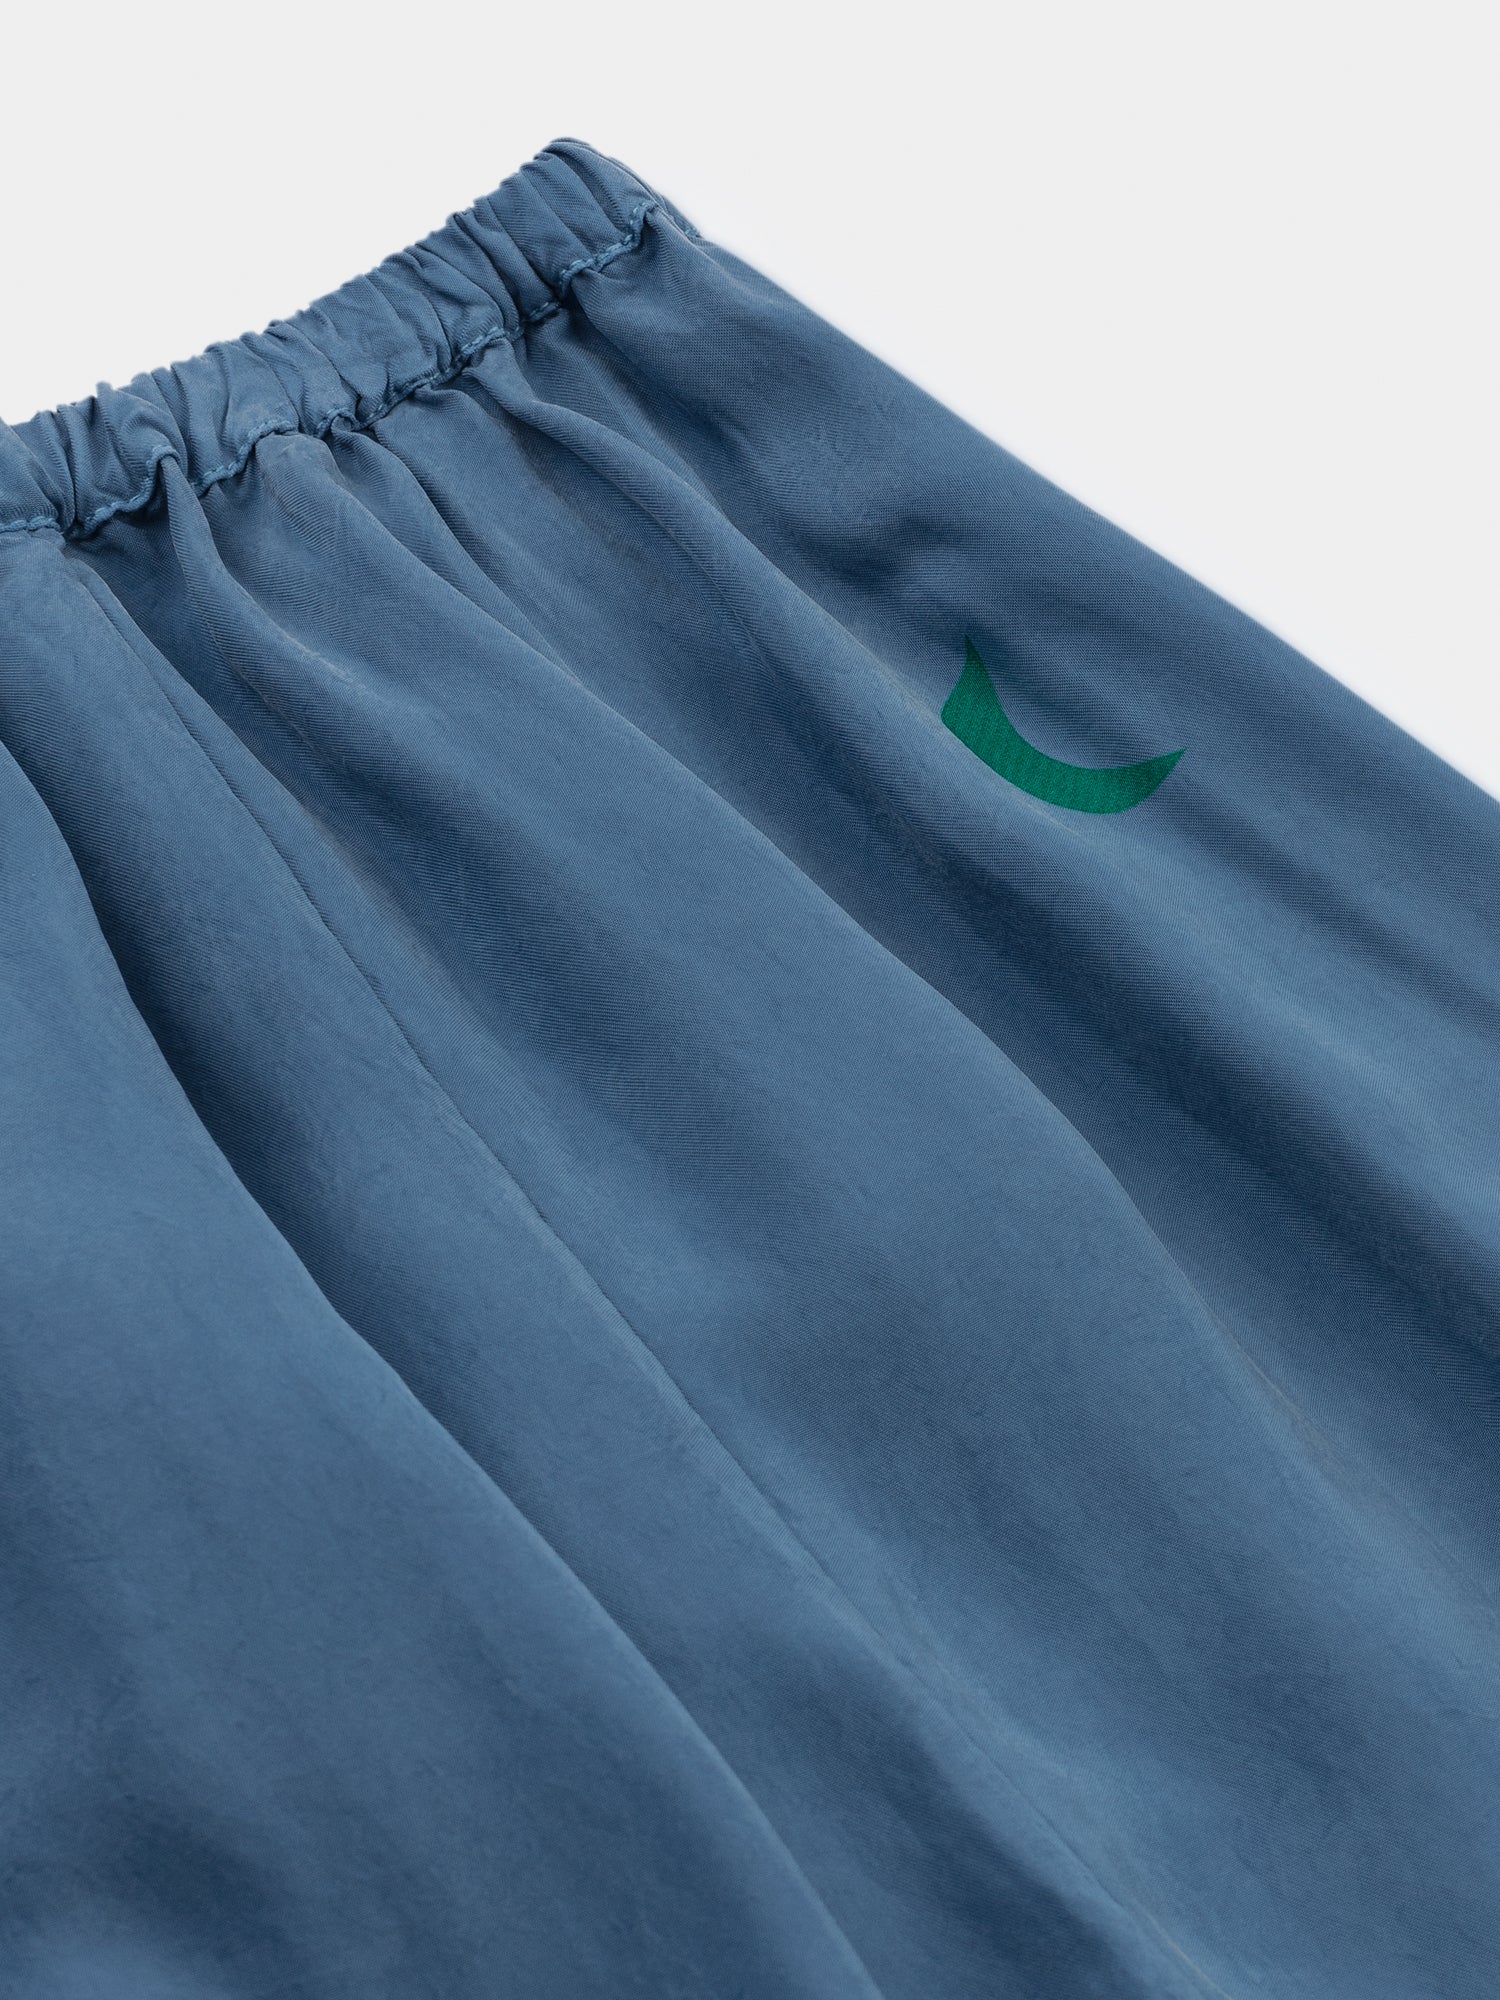 Girls Blue Moon Medium Skirt